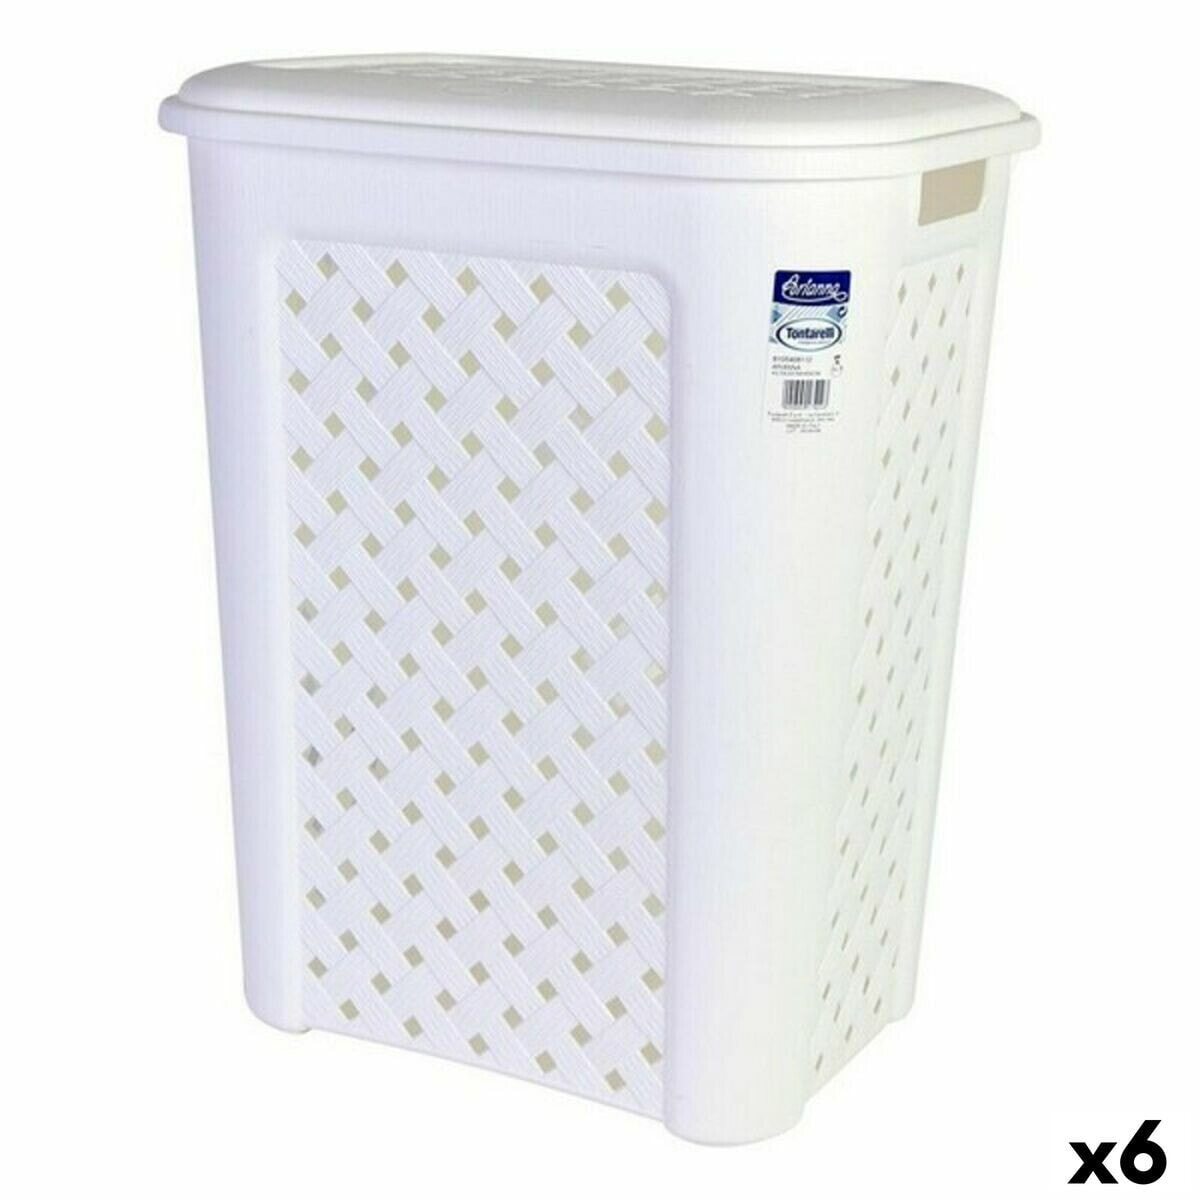 Laundry Basket Arianna Tontarelli 8105408_112 50 L White 44 x 35 x 55 cm (6 Units)